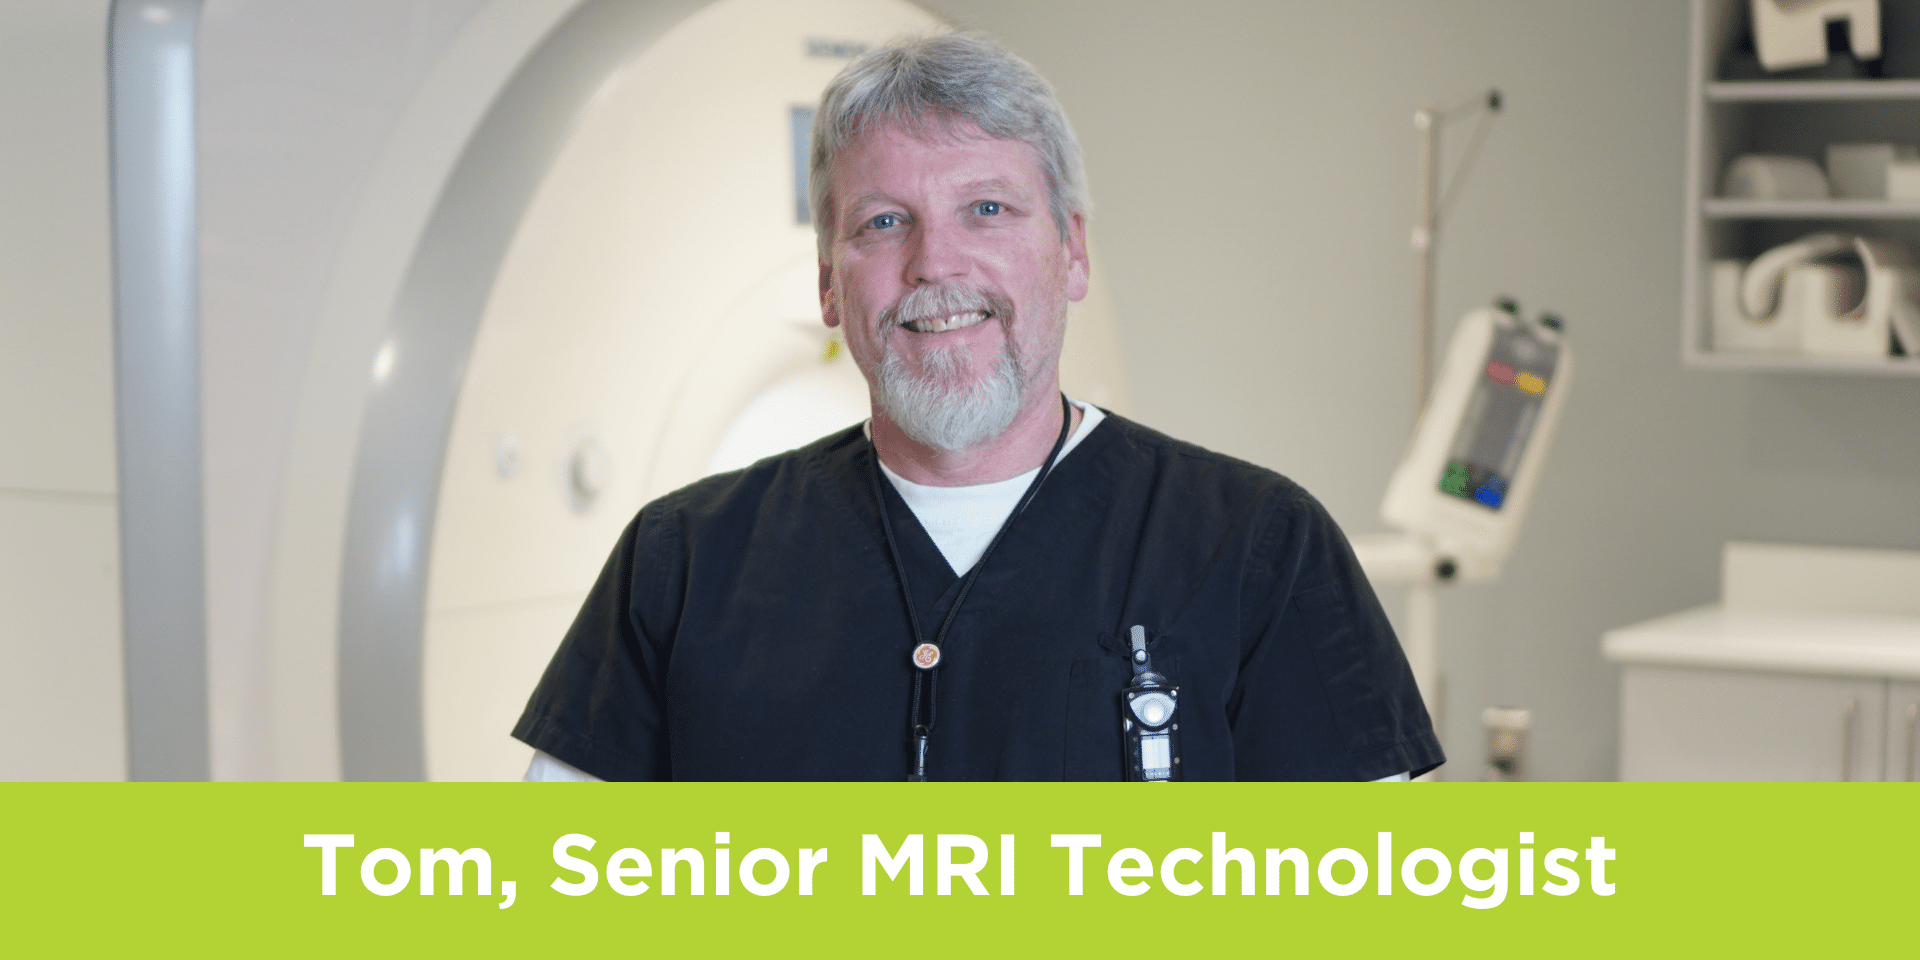 Tom, Senior MRI Technologist at MGH